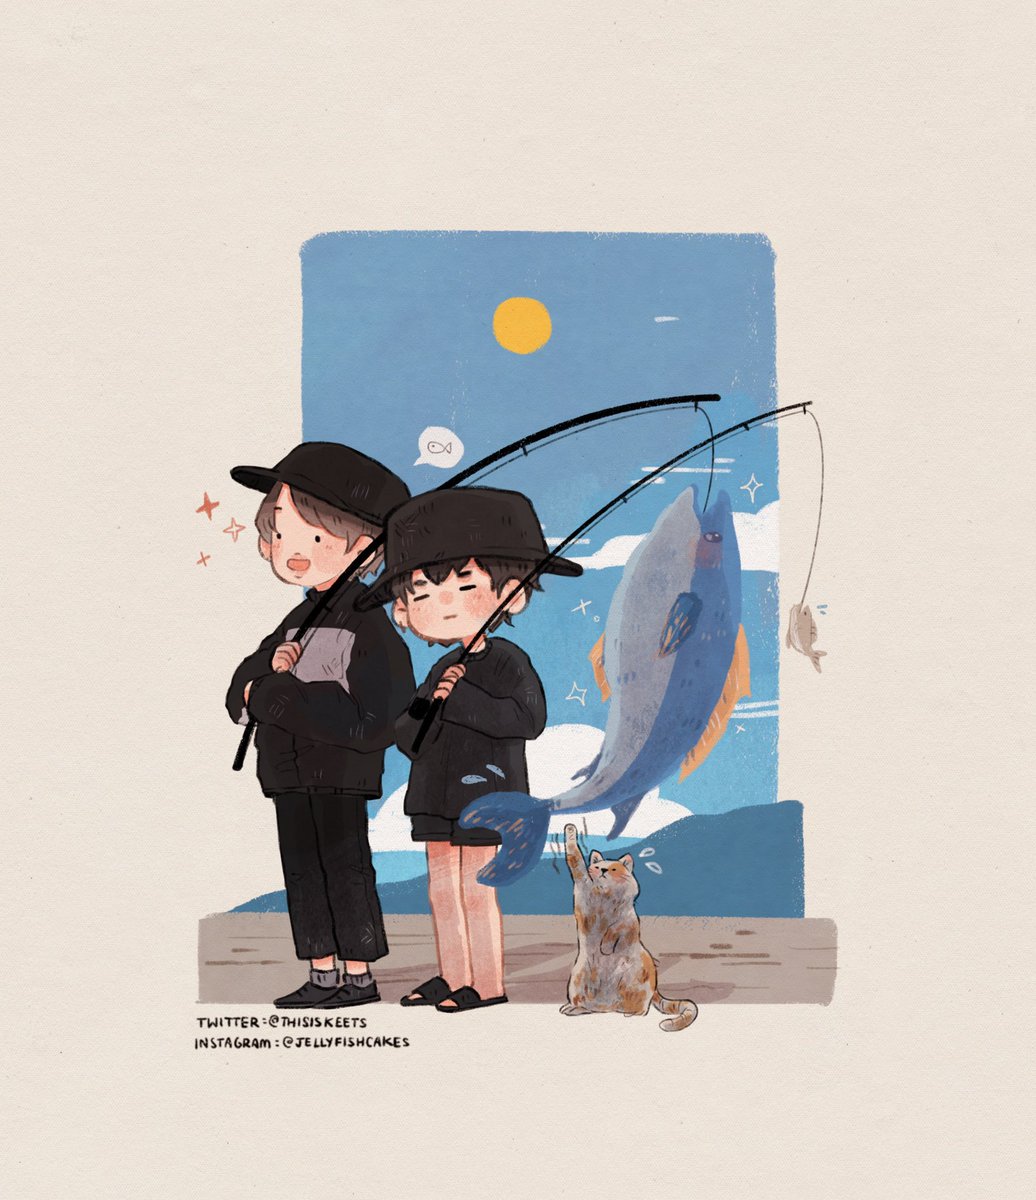 hat fishing rod cat fish 2boys holding fishing  illustration images